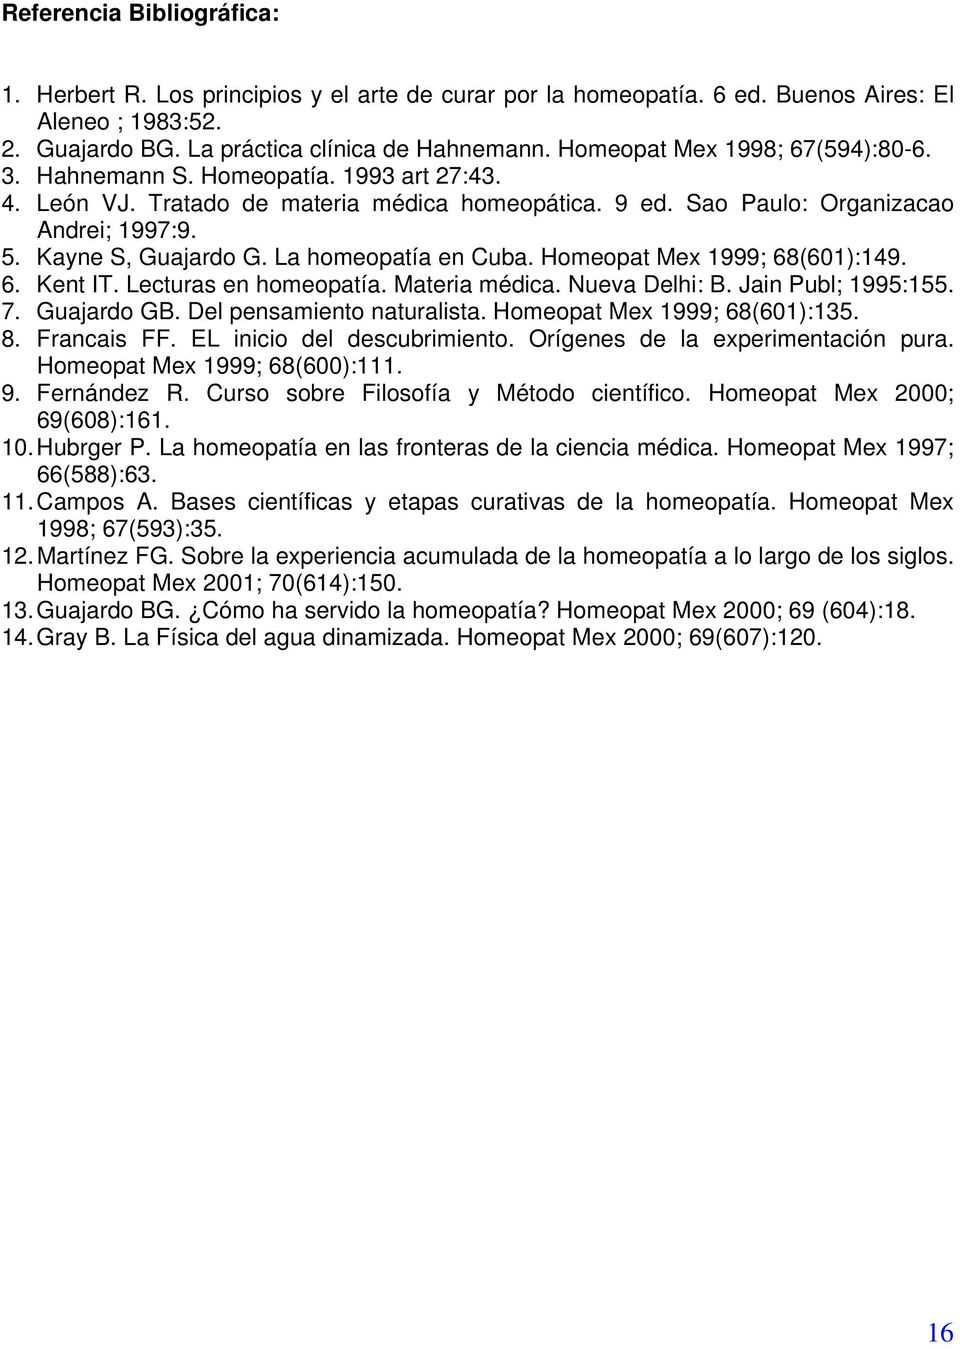 La homeopatía en Cuba. Homeopat Mex 1999; 68(601):149. 6. Kent IT. Lecturas en homeopatía. Materia médica. Nueva Delhi: B. Jain Publ; 1995:155. 7. Guajardo GB. Del pensamiento naturalista.